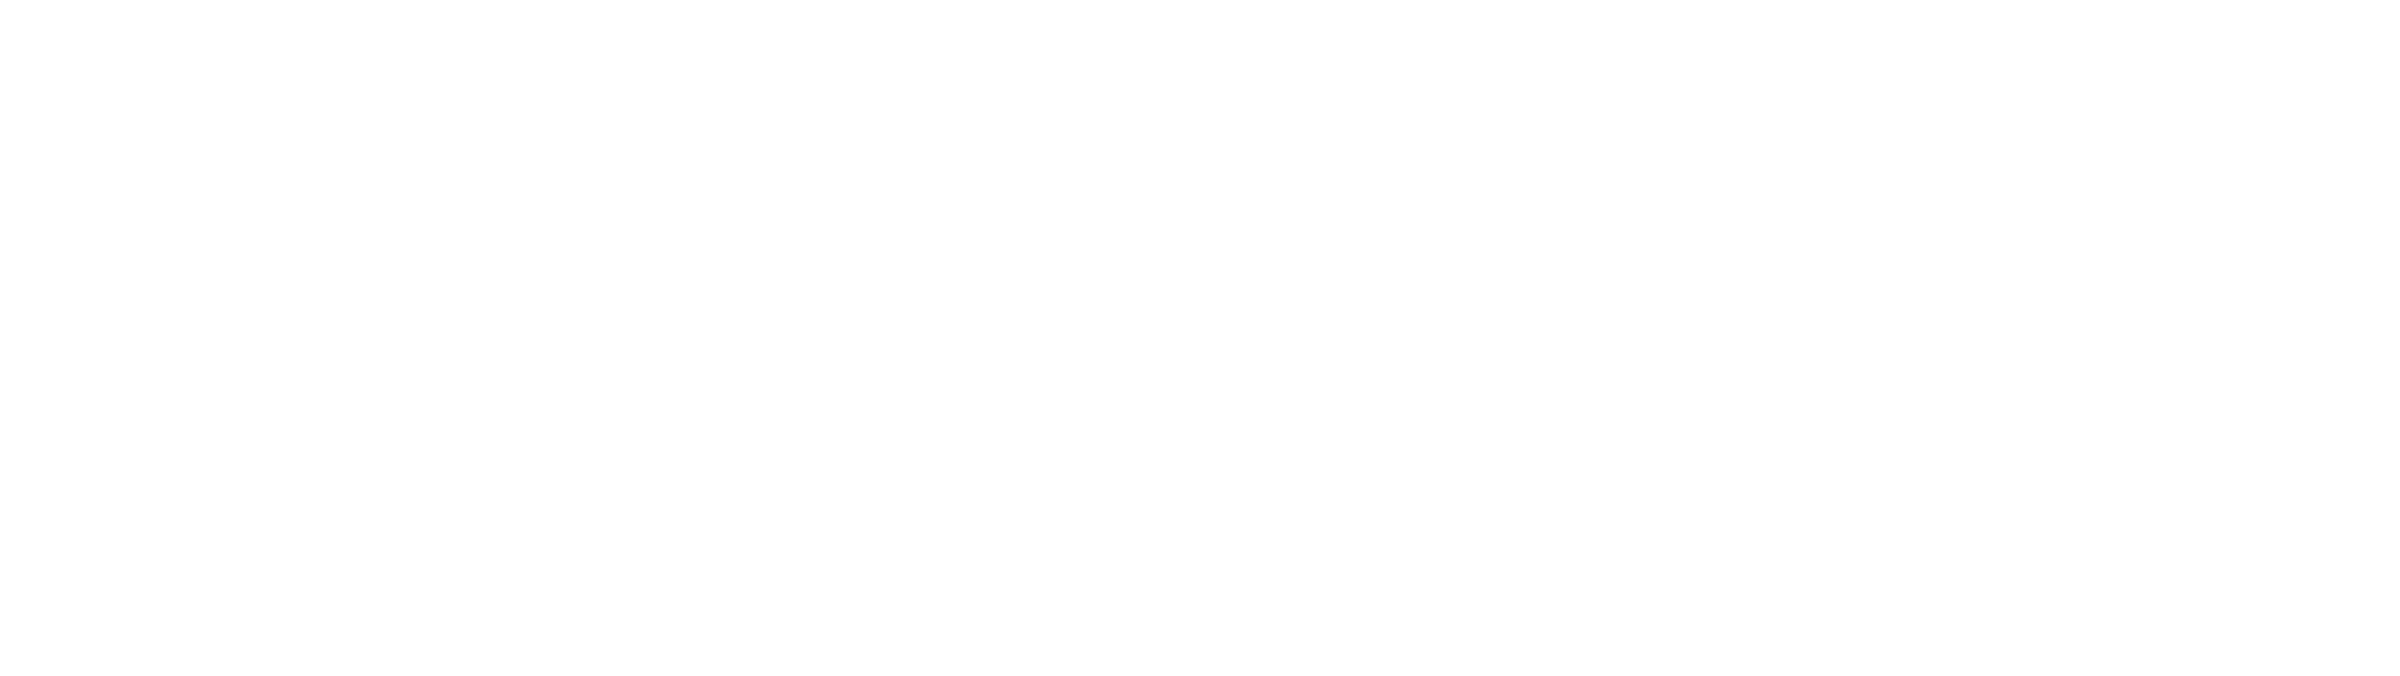 Silverado casino logo